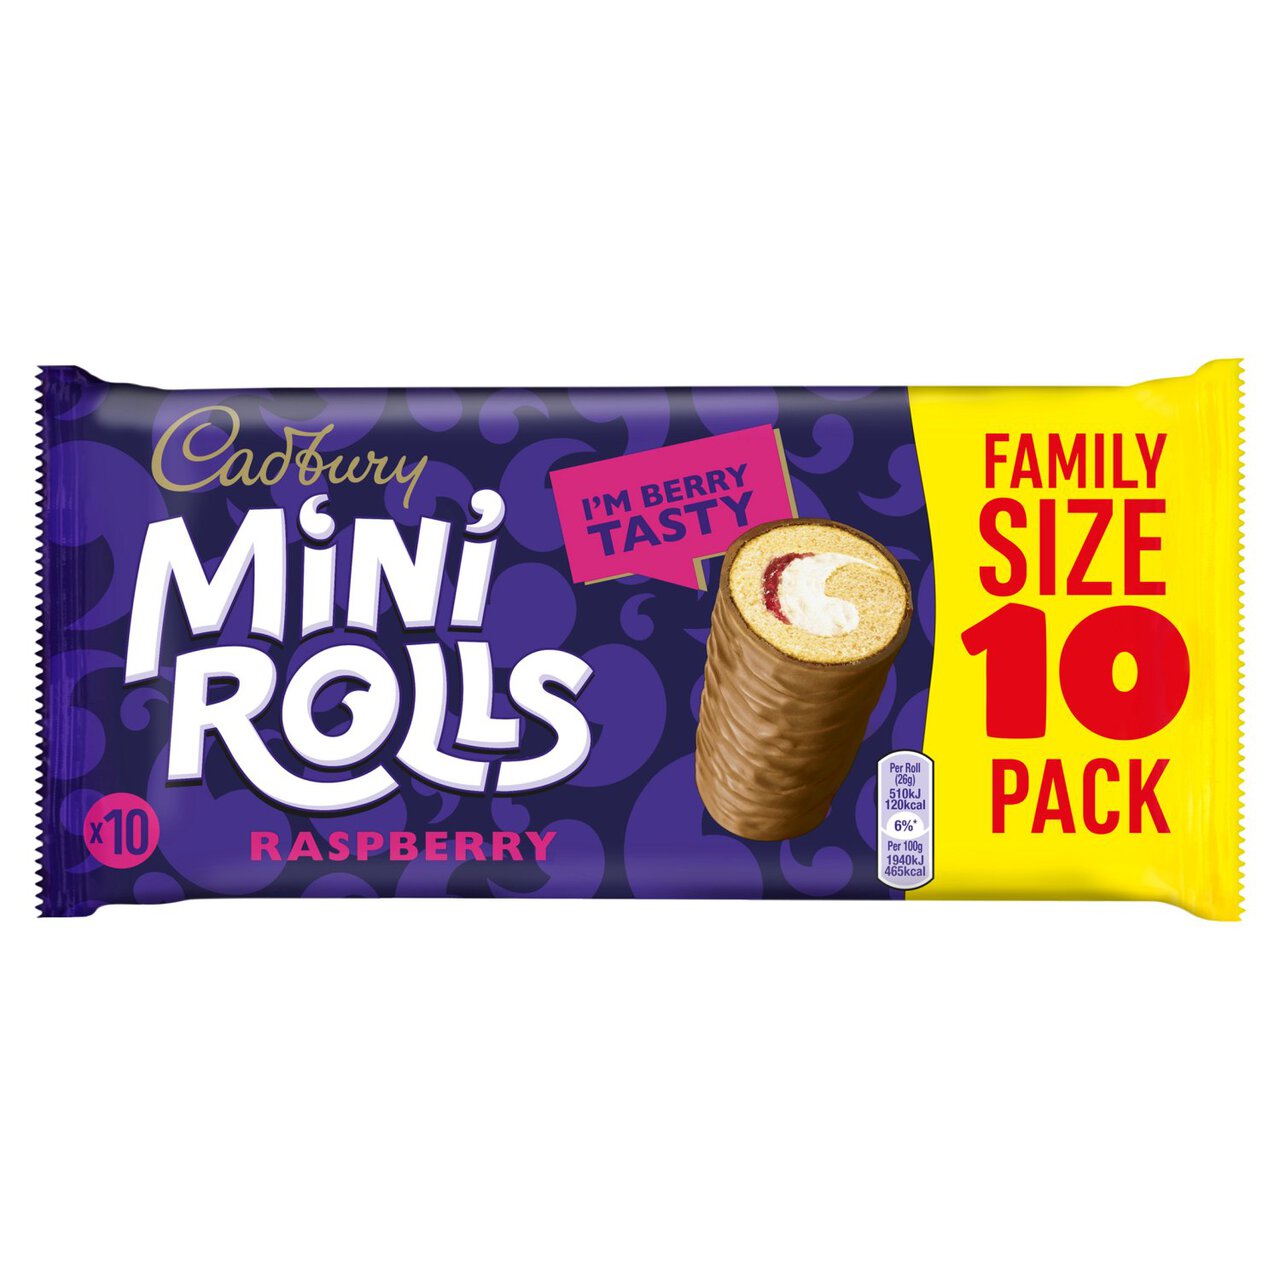 Cadbury Mini Rolls Raspberry Family Size 10 per pack